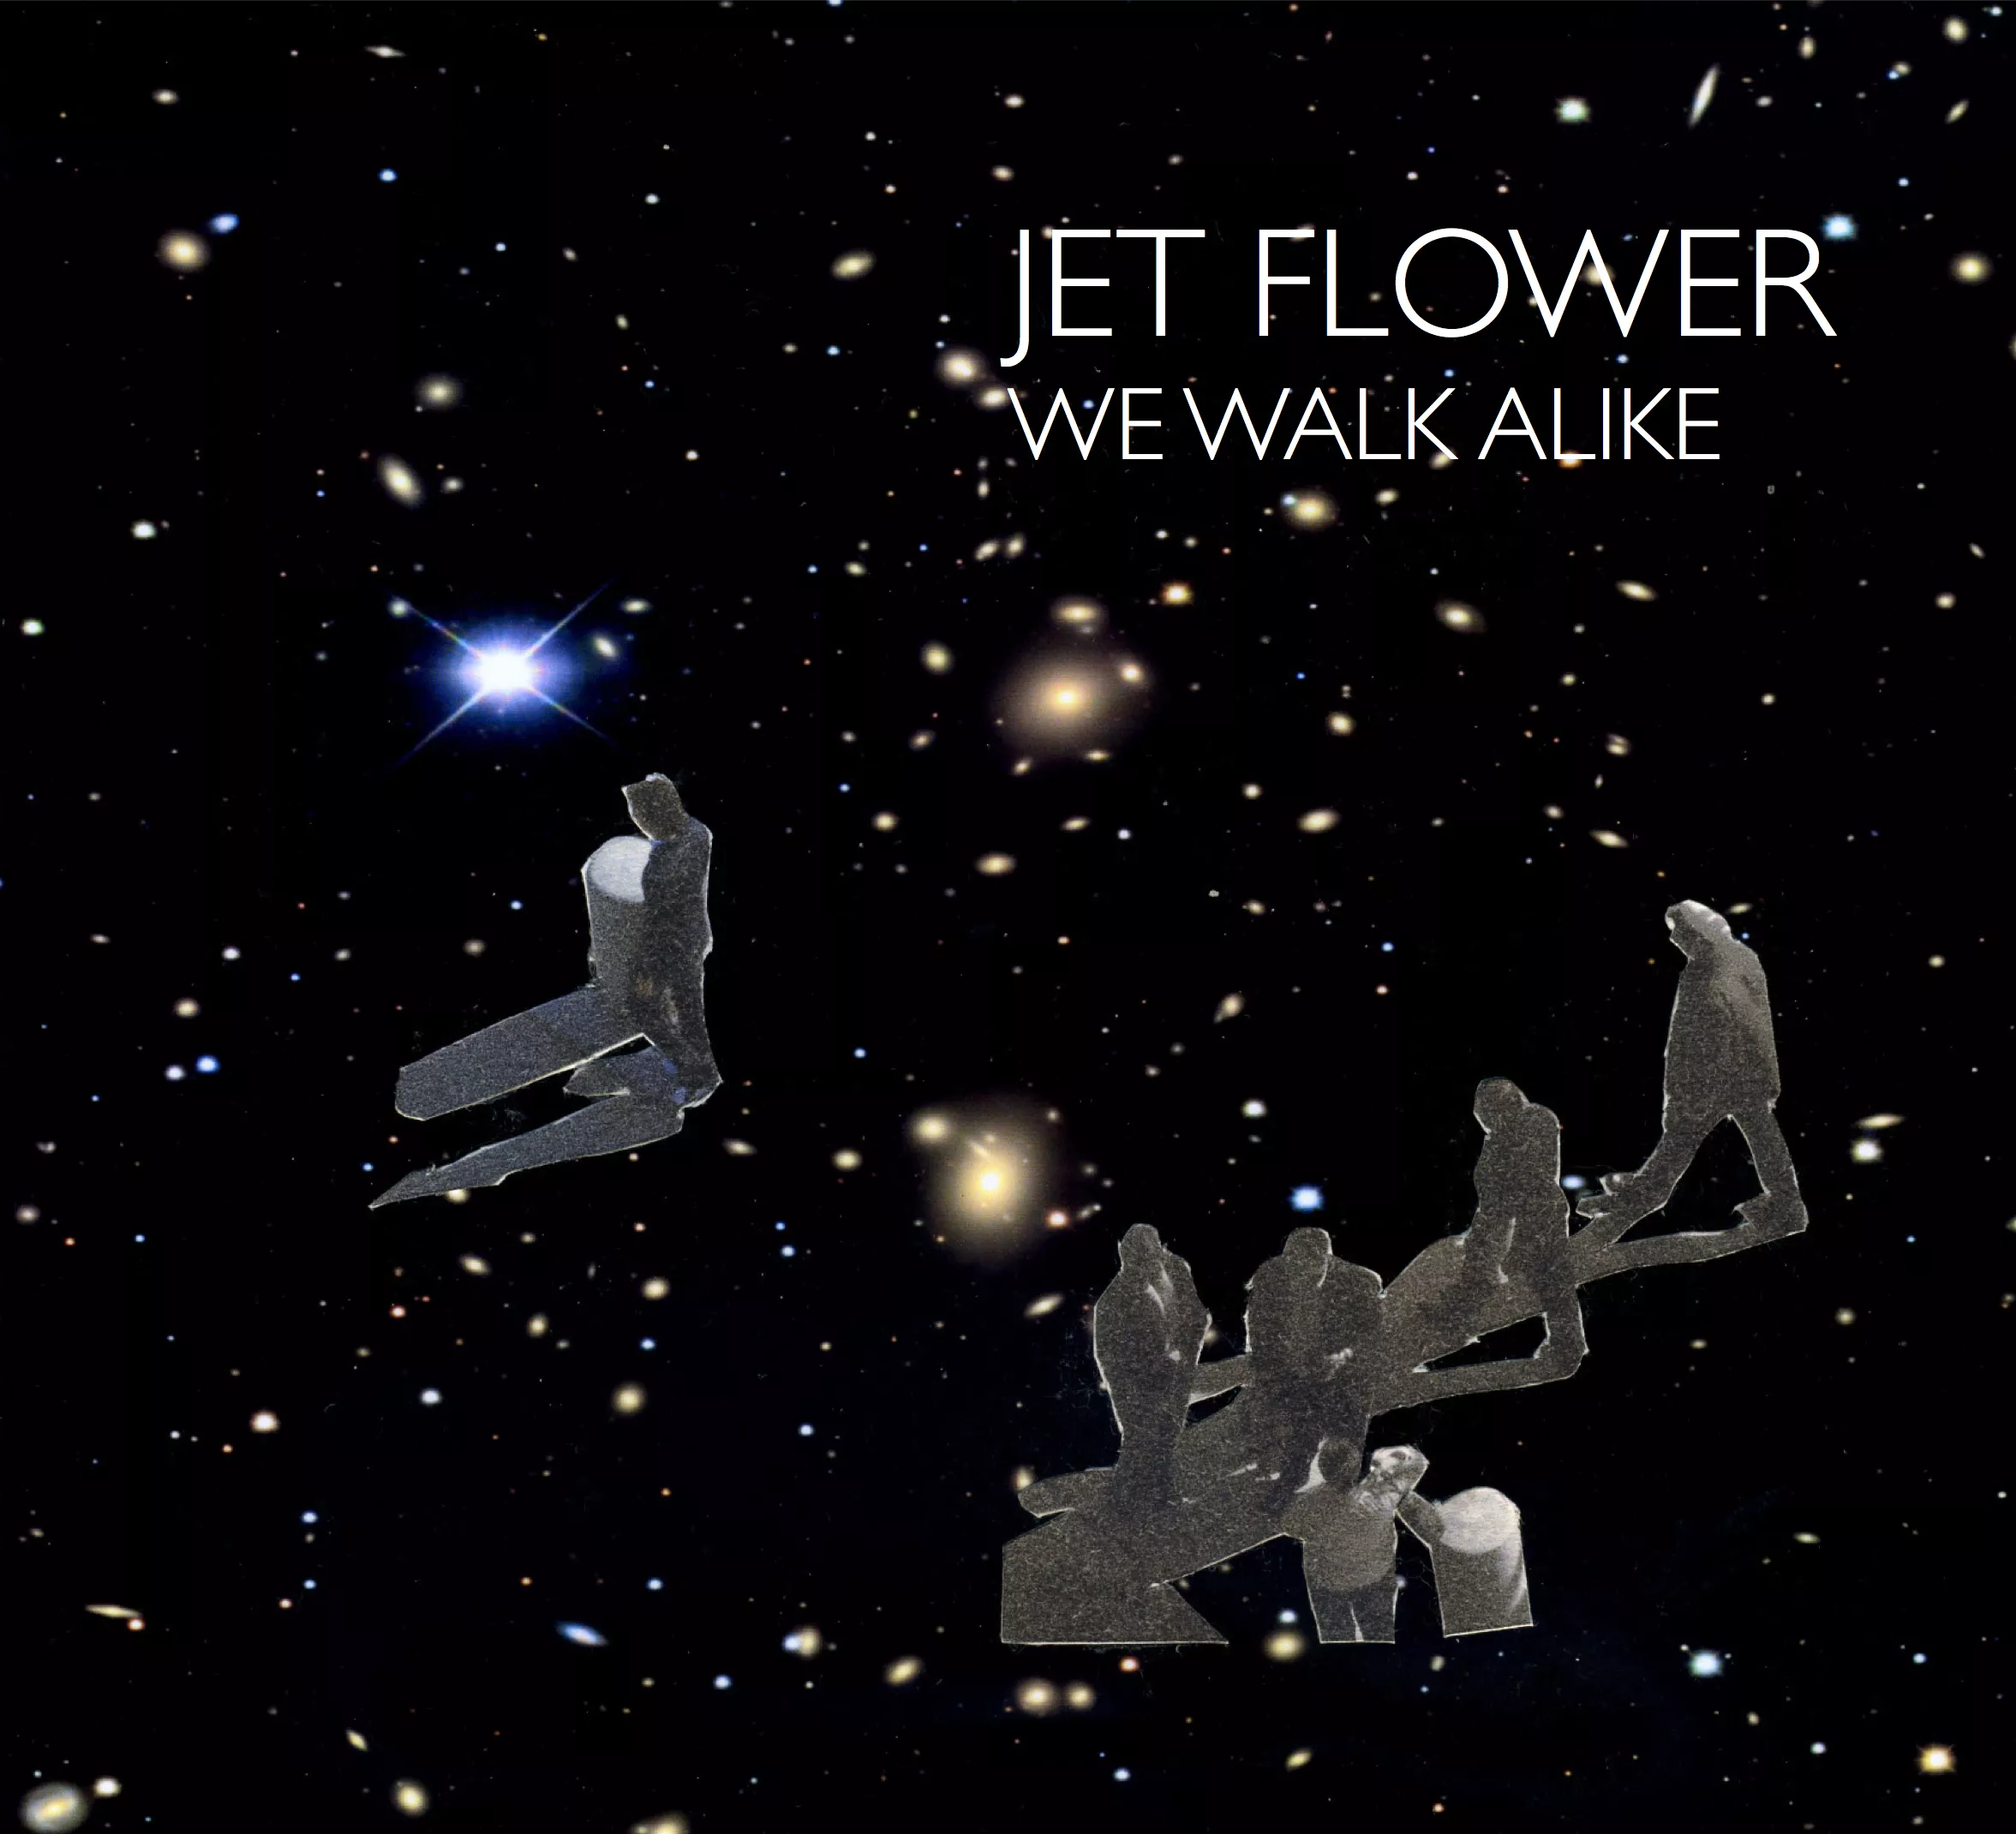 We Walk Alike - Jet Flower